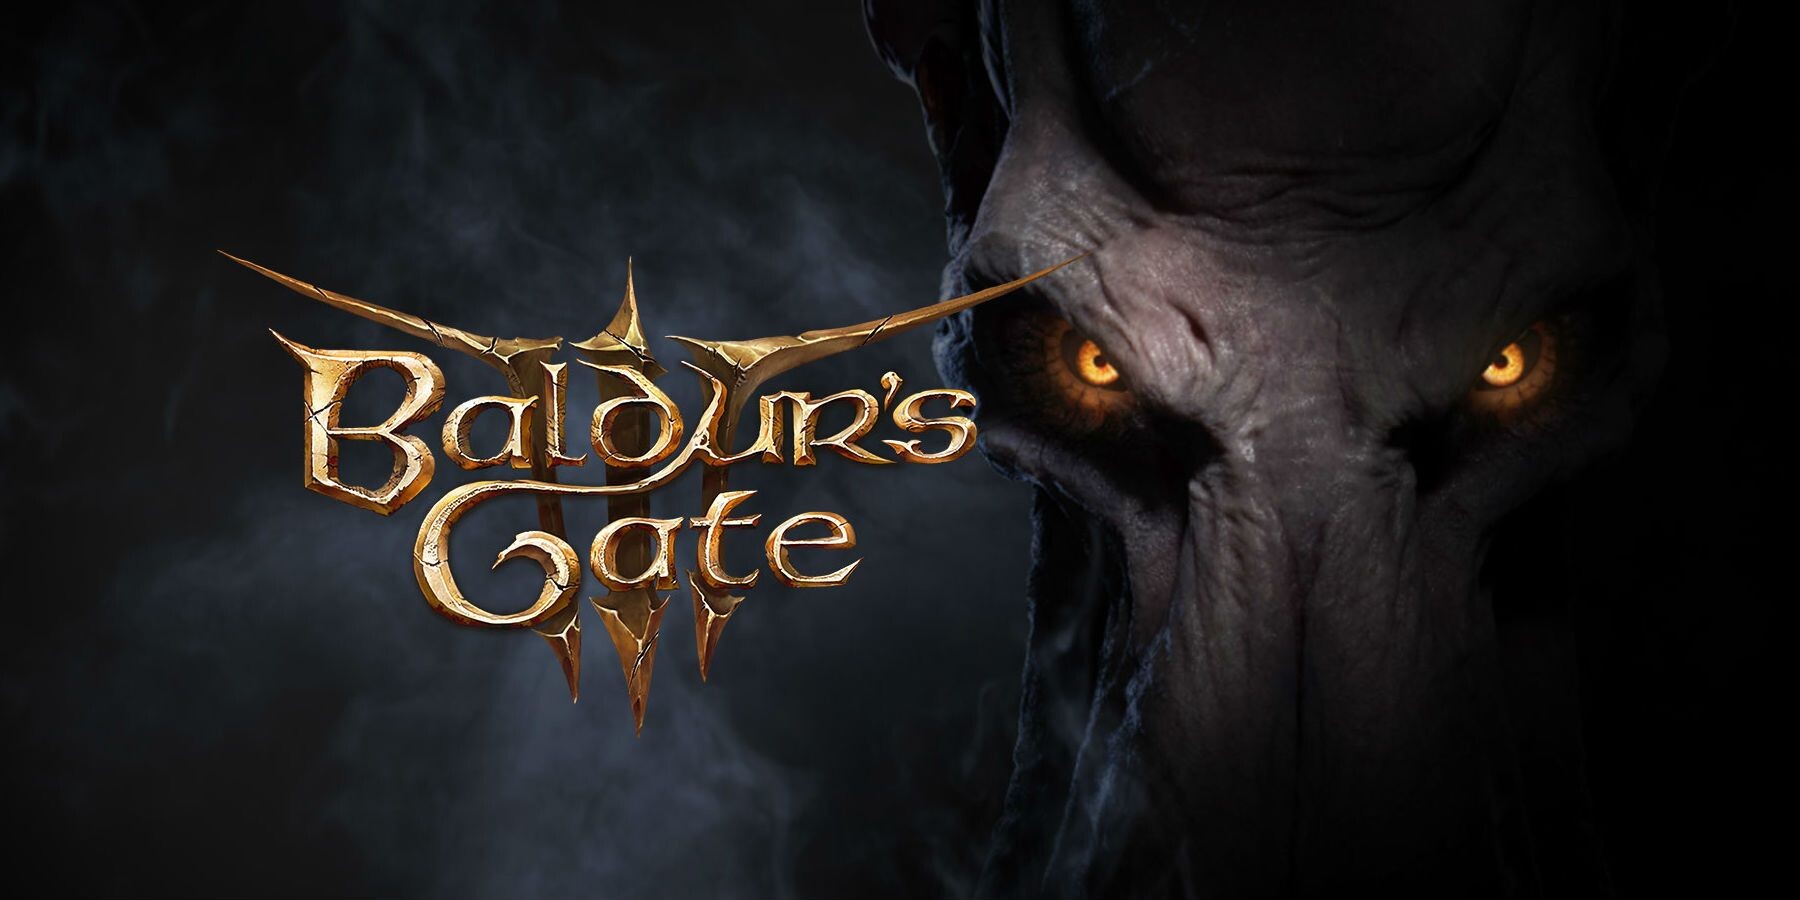 Baldur’s Gate III download the new